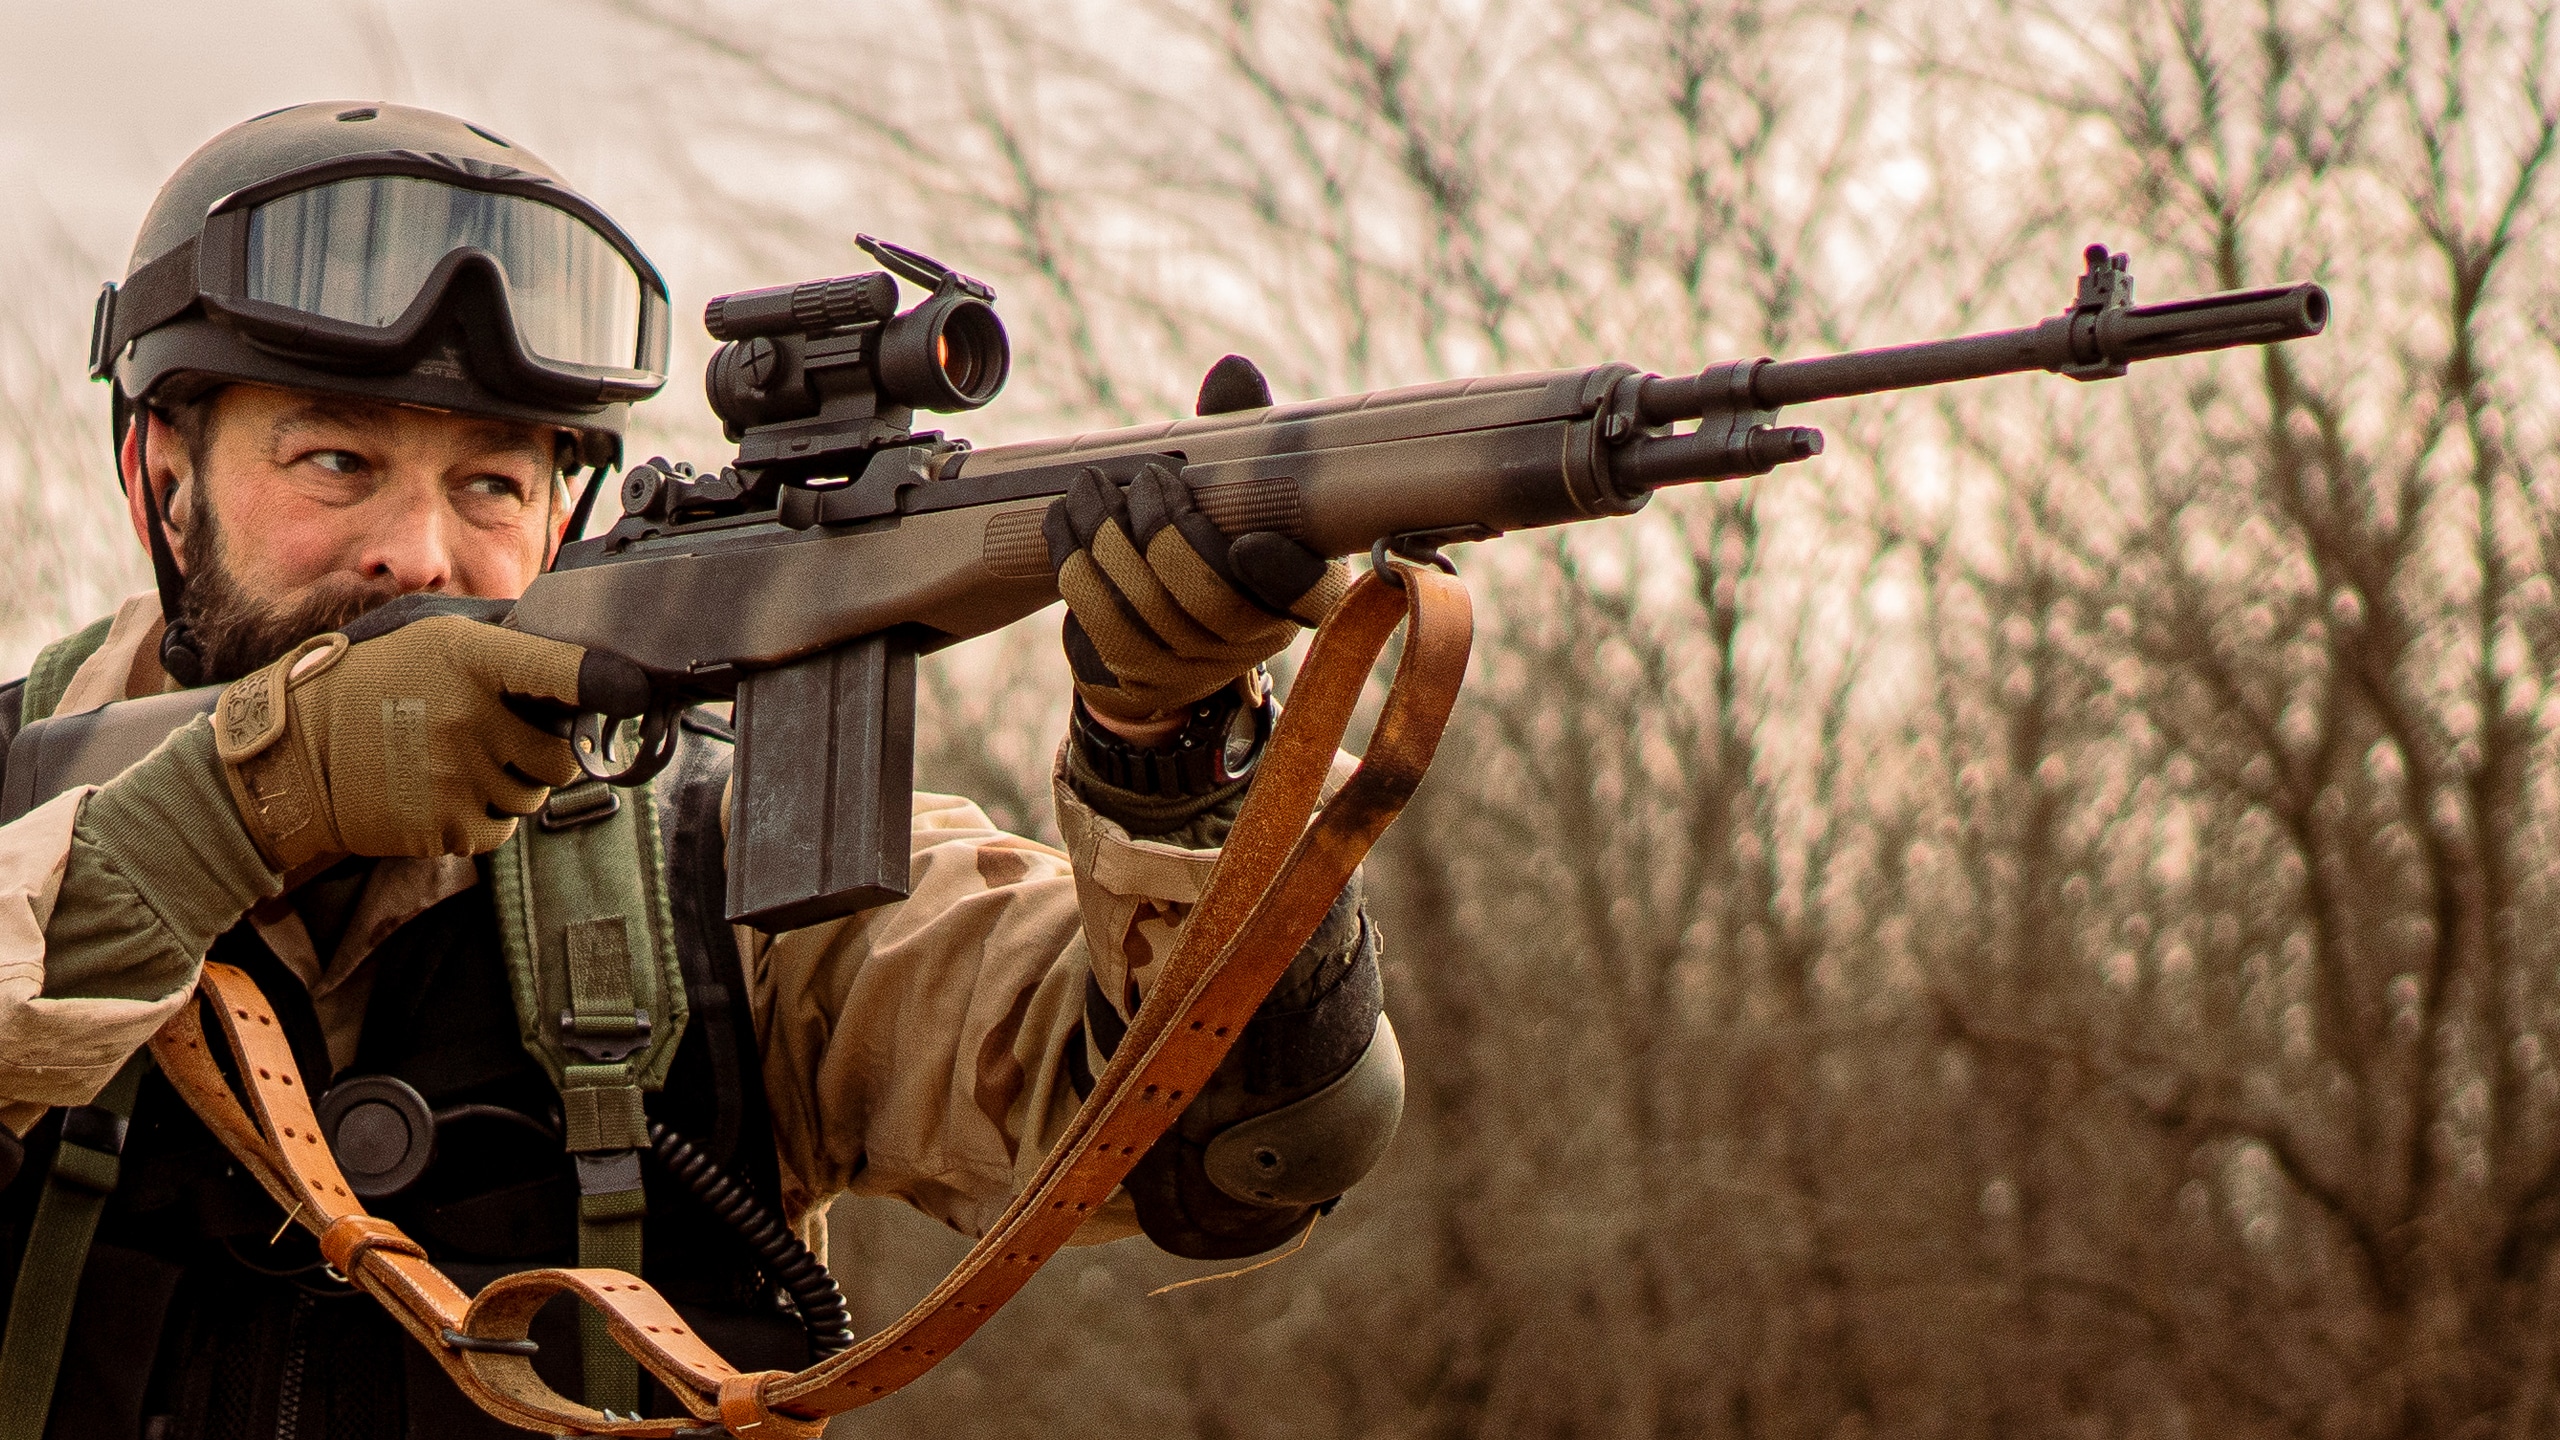 M14 Sniper Rifle Usmc